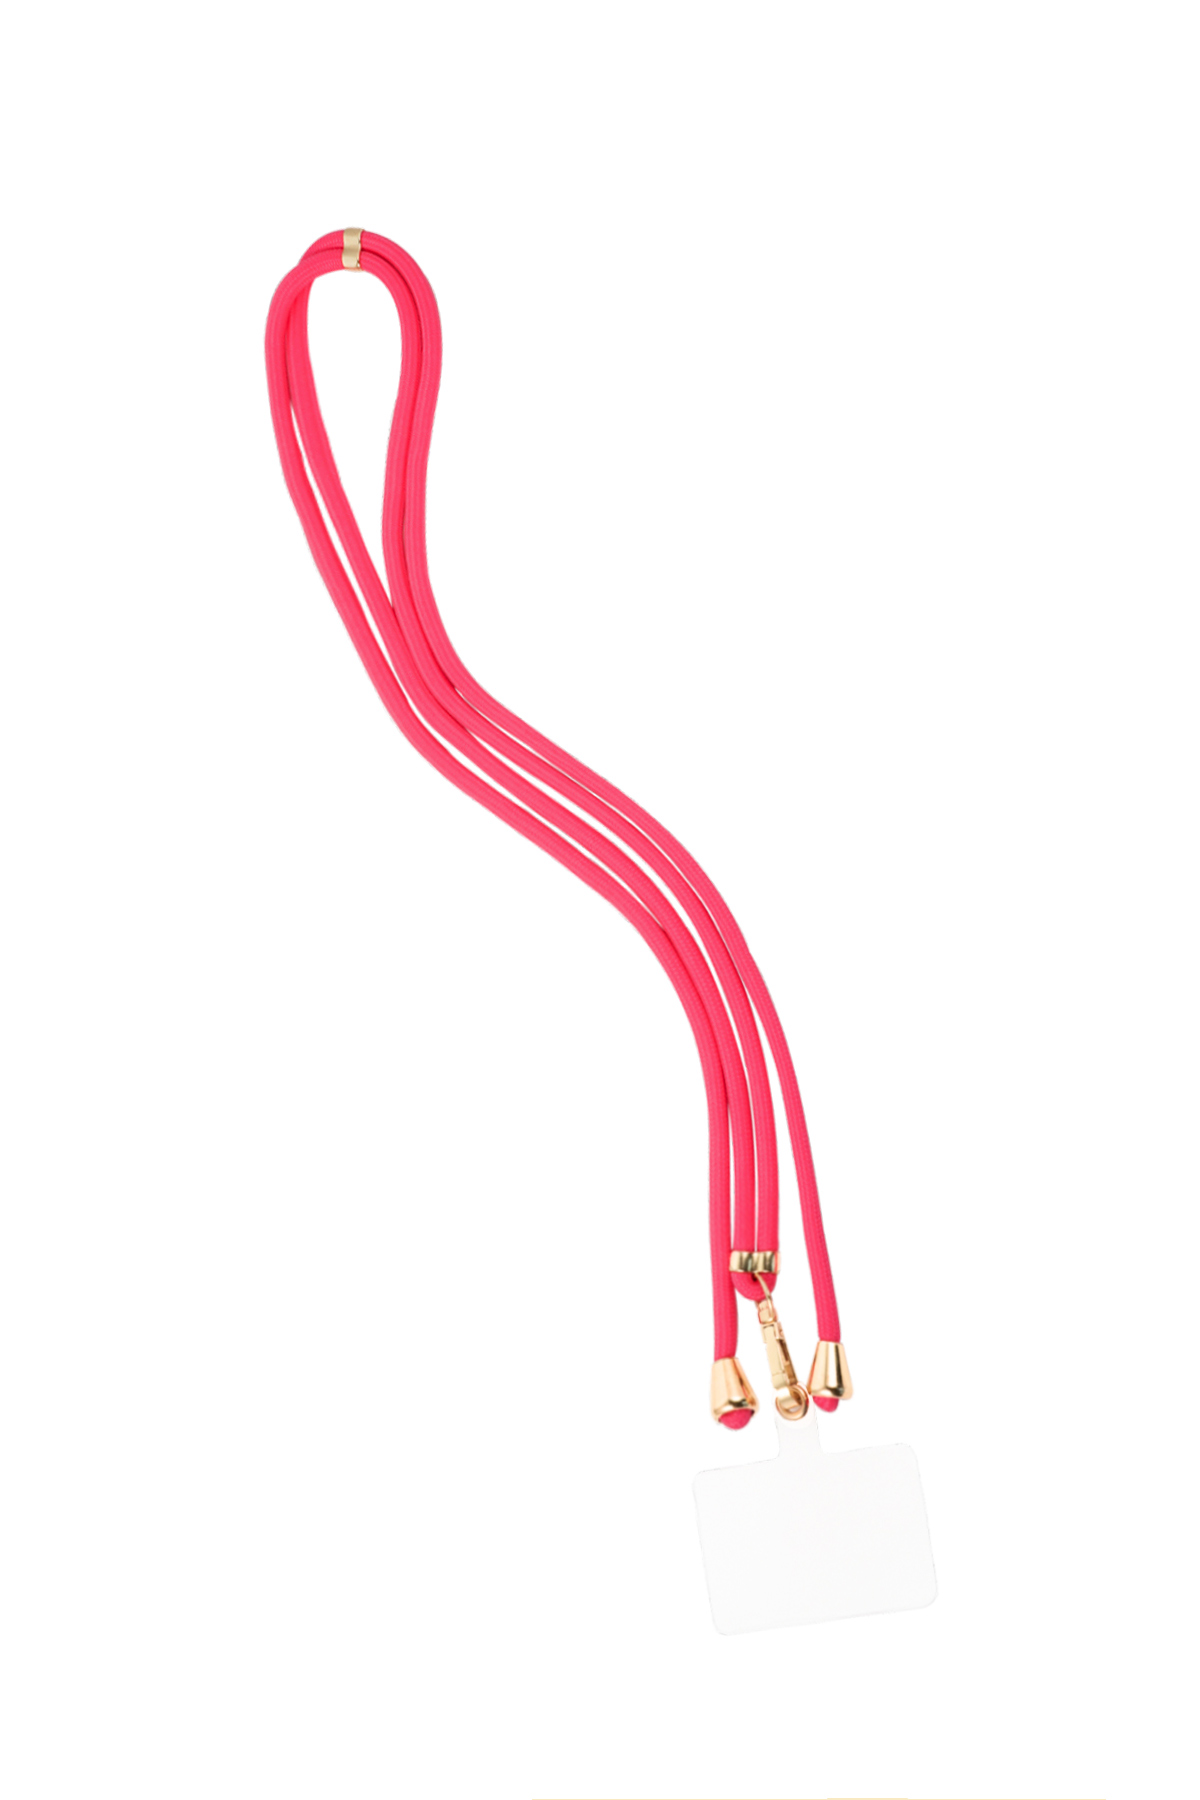 Telephone cord subtle print - pink h5 